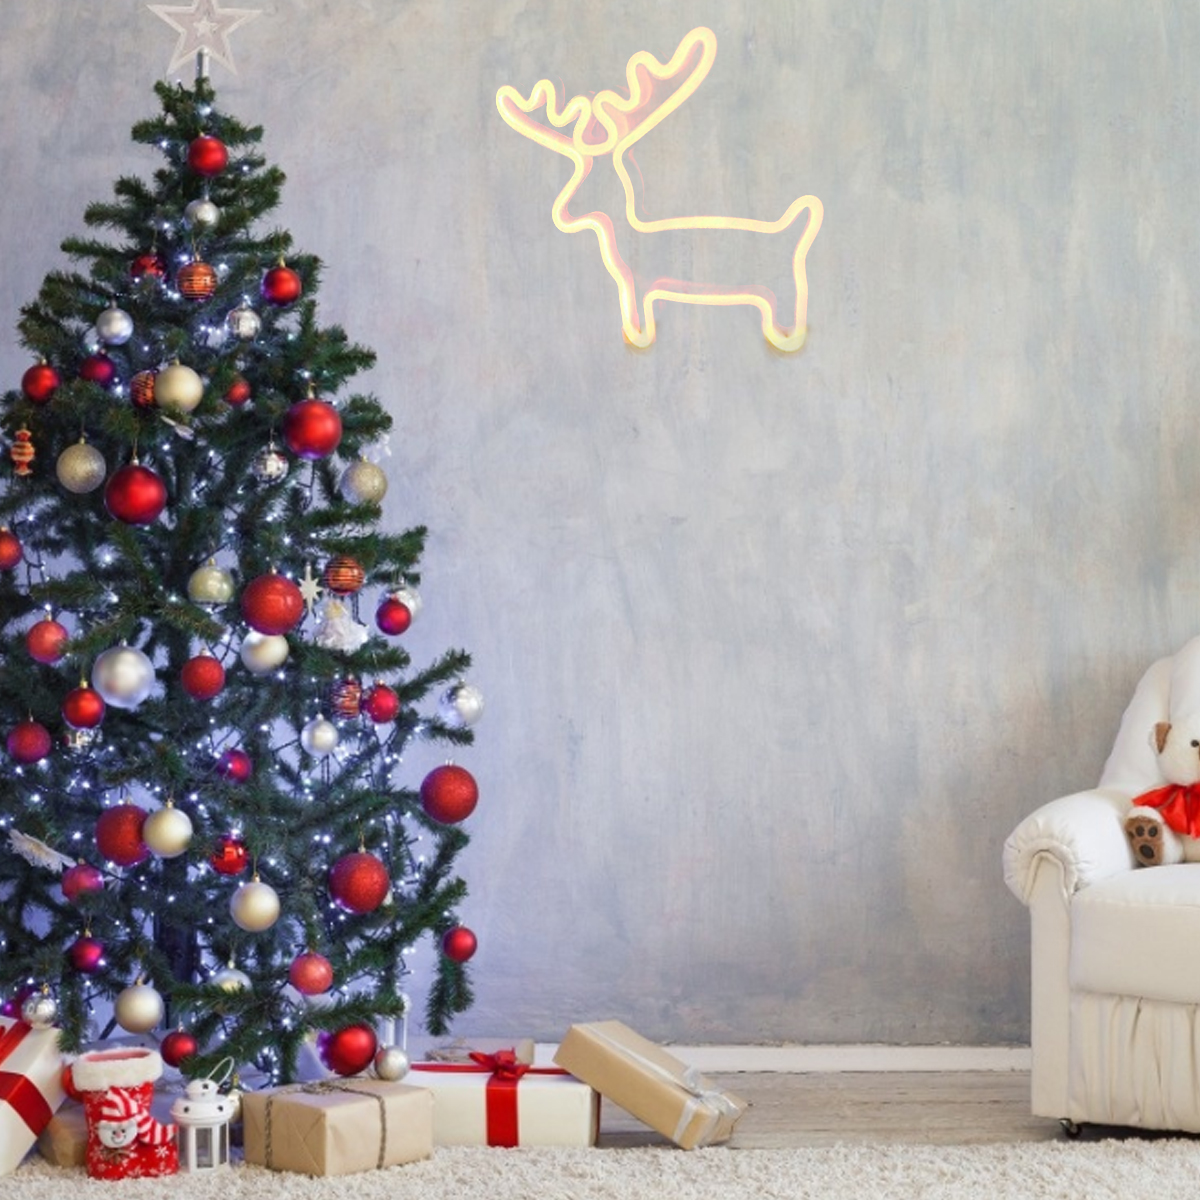 BatteryUSB-Neon-Light-Sign-LED-Lamp-Shaped-Night-Light-Art-Wall-Warm-Party-Christmas-Decoration-1800988-6